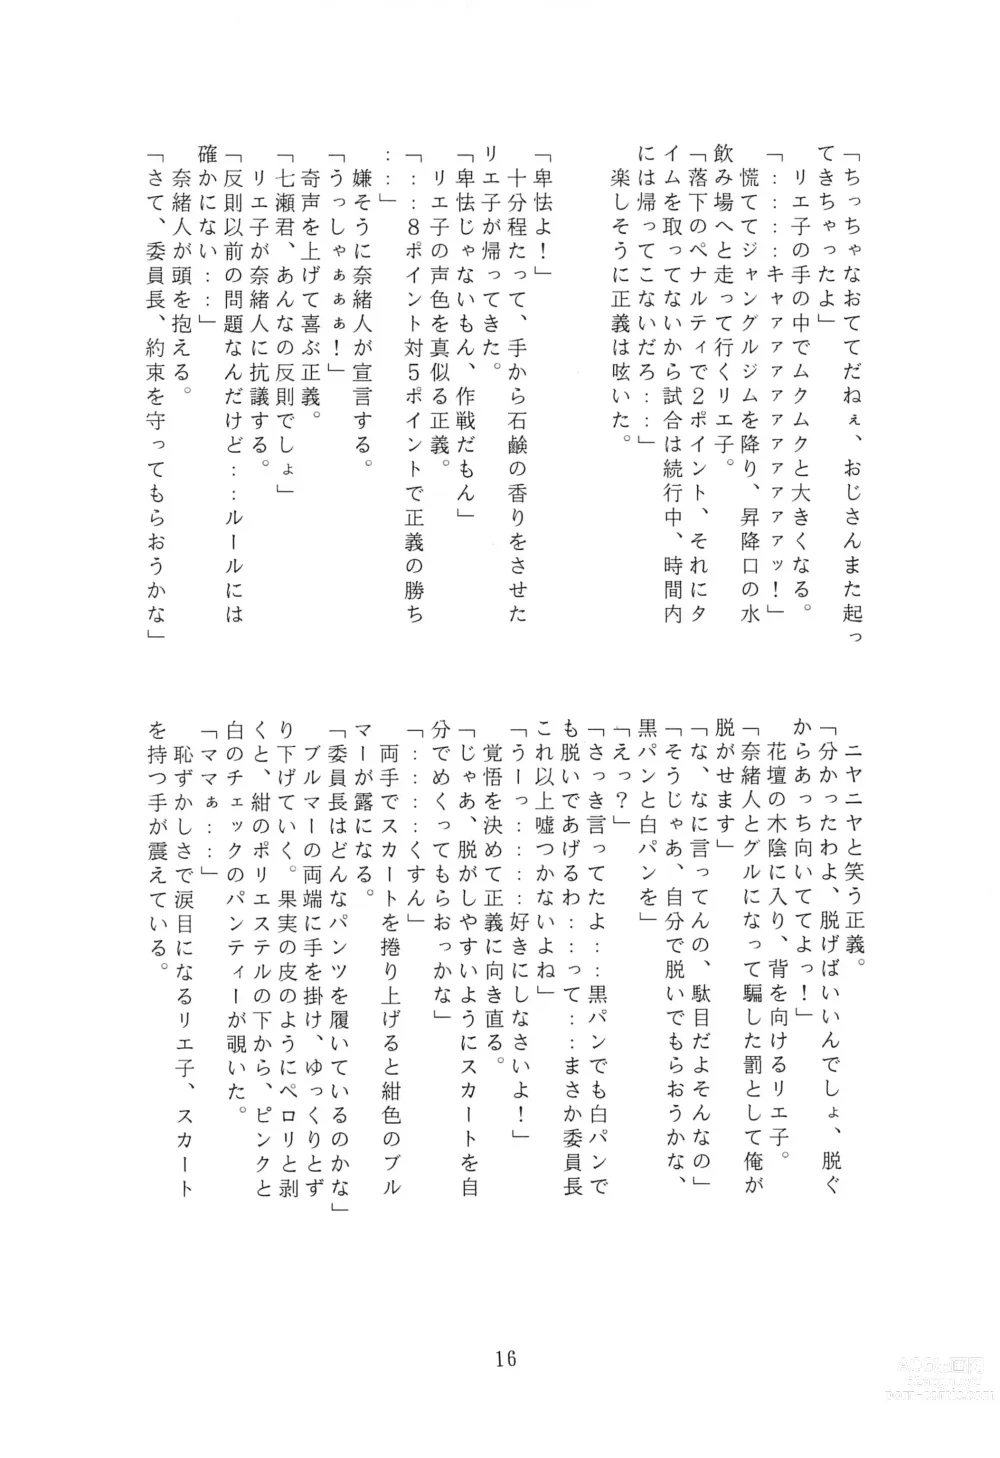 Page 16 of doujinshi JANGLE ONI Mermaid